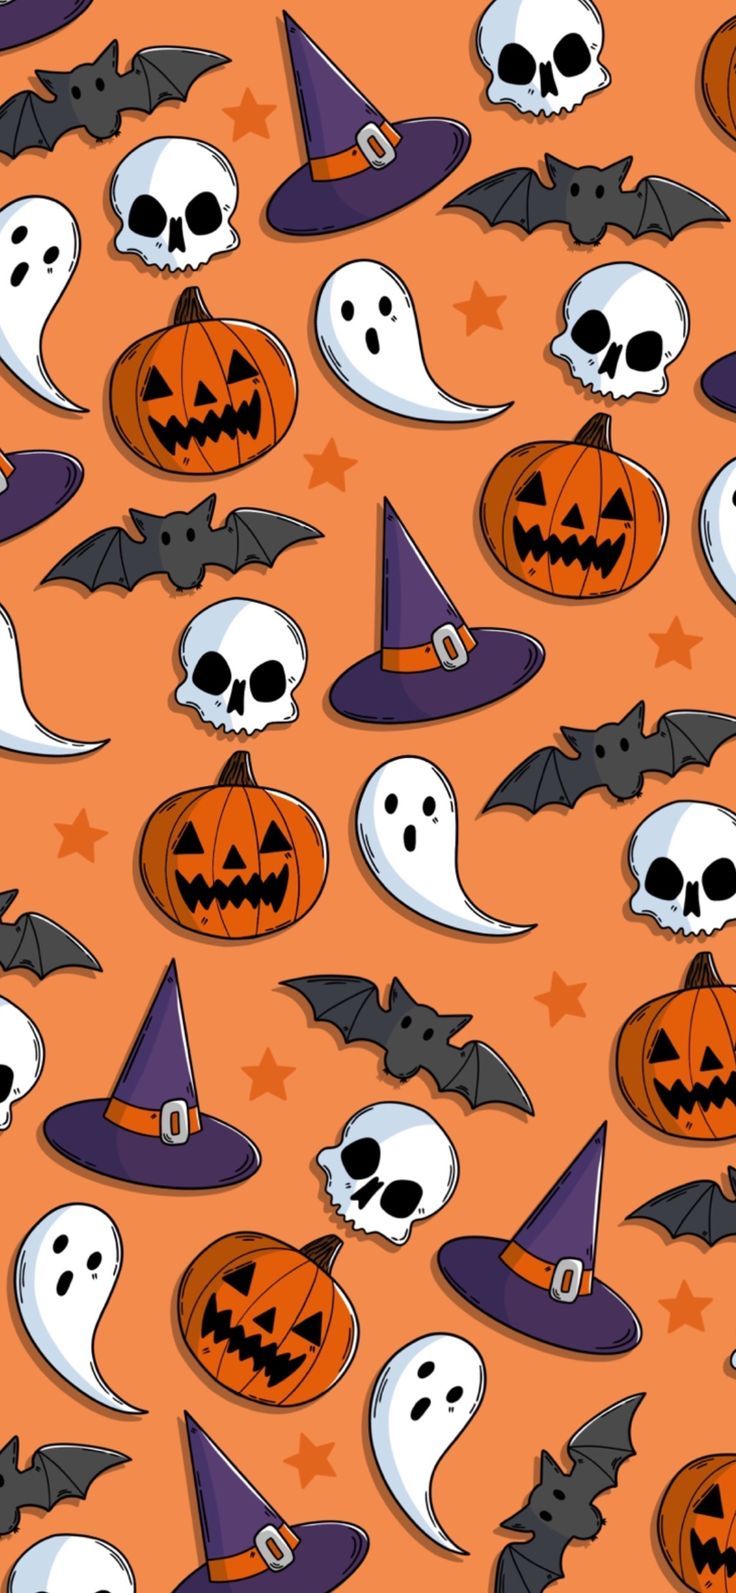 Halloween spooky ghost pumpkin bat skull illustration phone wallpaper background halloween wallpaper iphone halloween wallpaper halloween wallpaper backgrounds